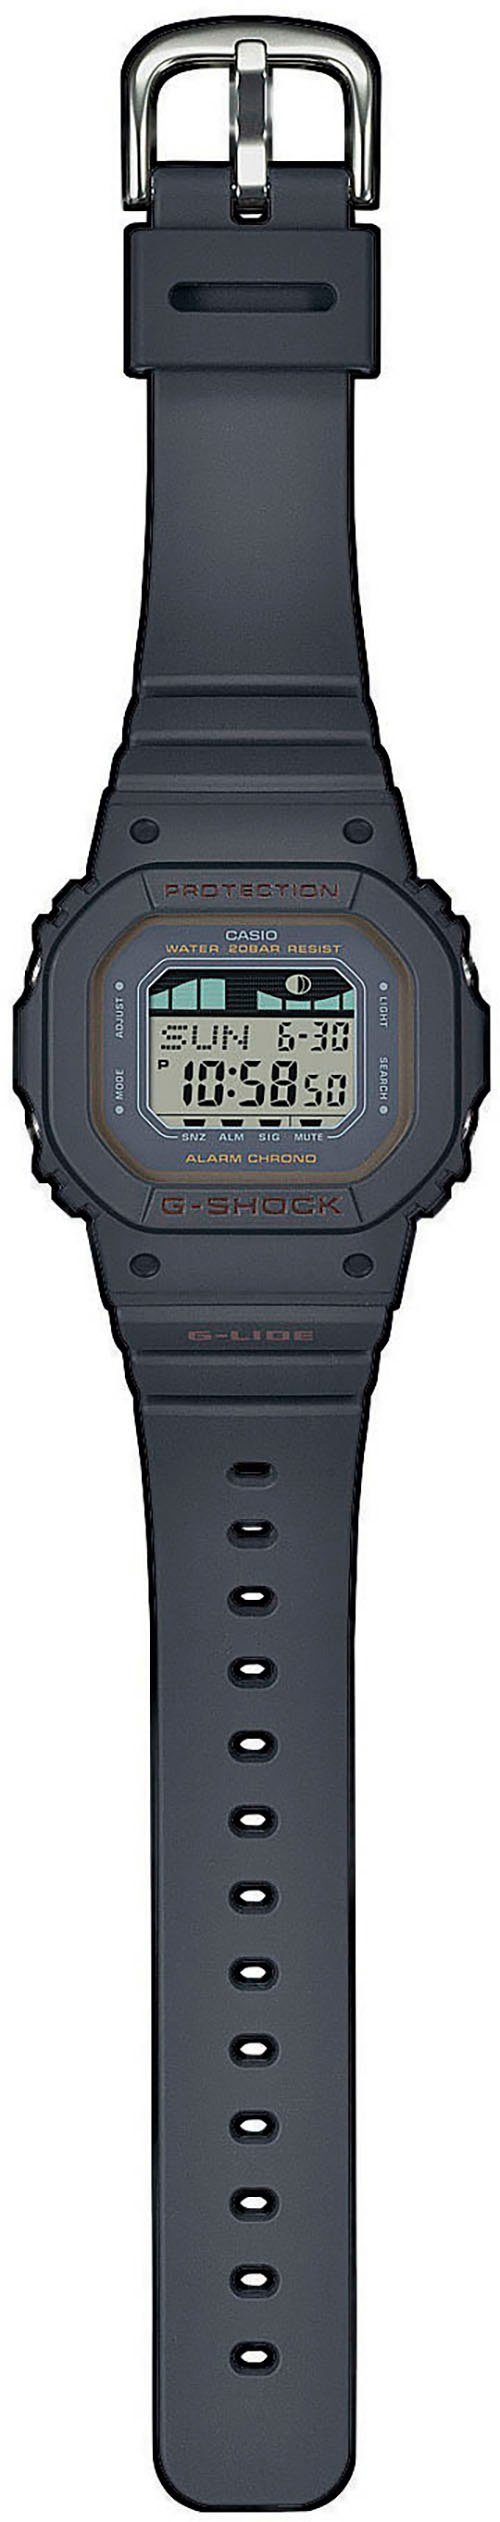 GLX-S5600-1ER G-SHOCK CASIO Chronograph